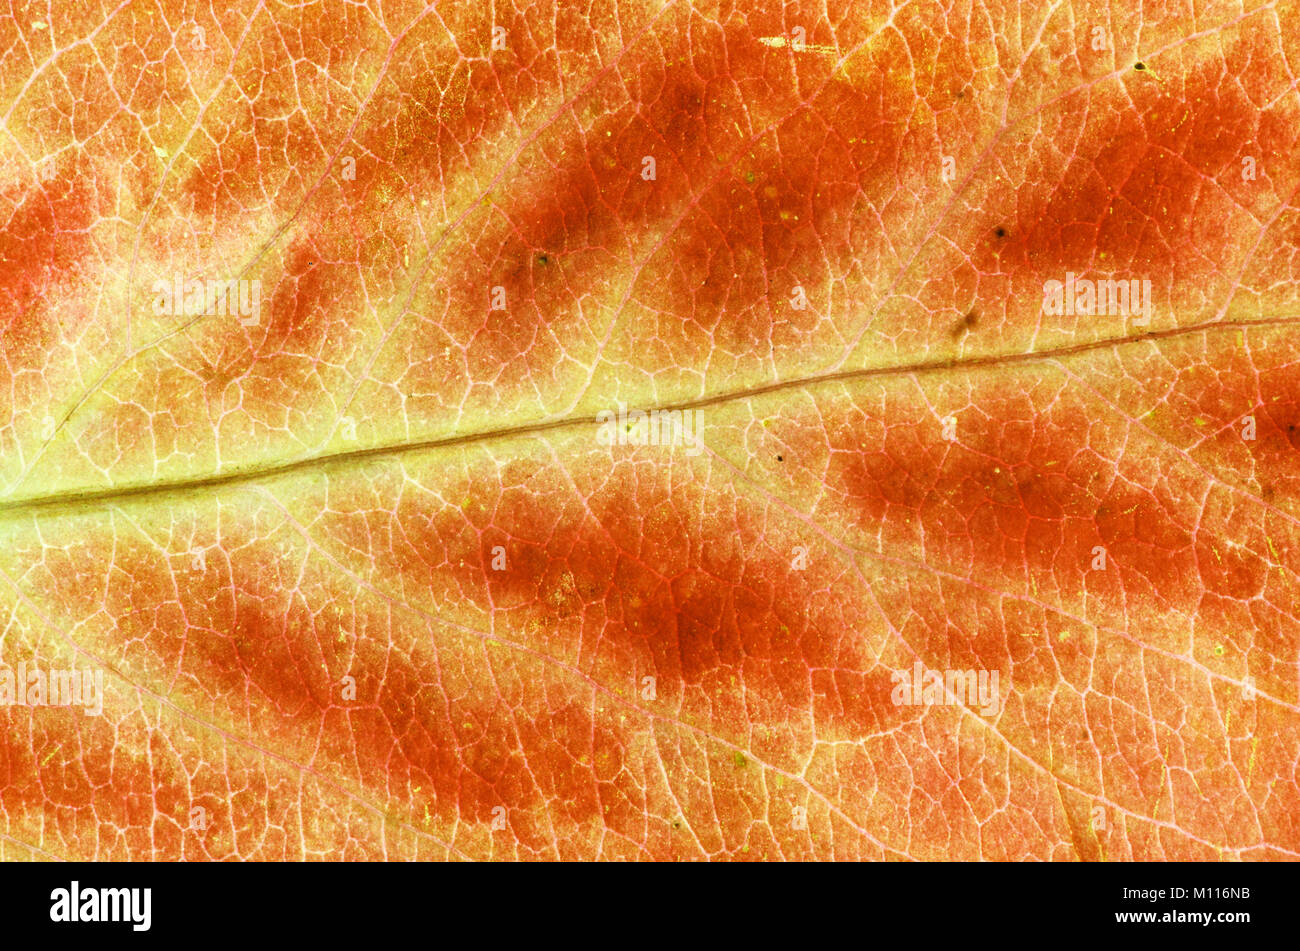 Dettaglio di foglia in autunno, Renania settentrionale-Vestfalia, Germania | Blattdetail im Herbst, Nordrhein-Westfalen, Deutschland Foto Stock